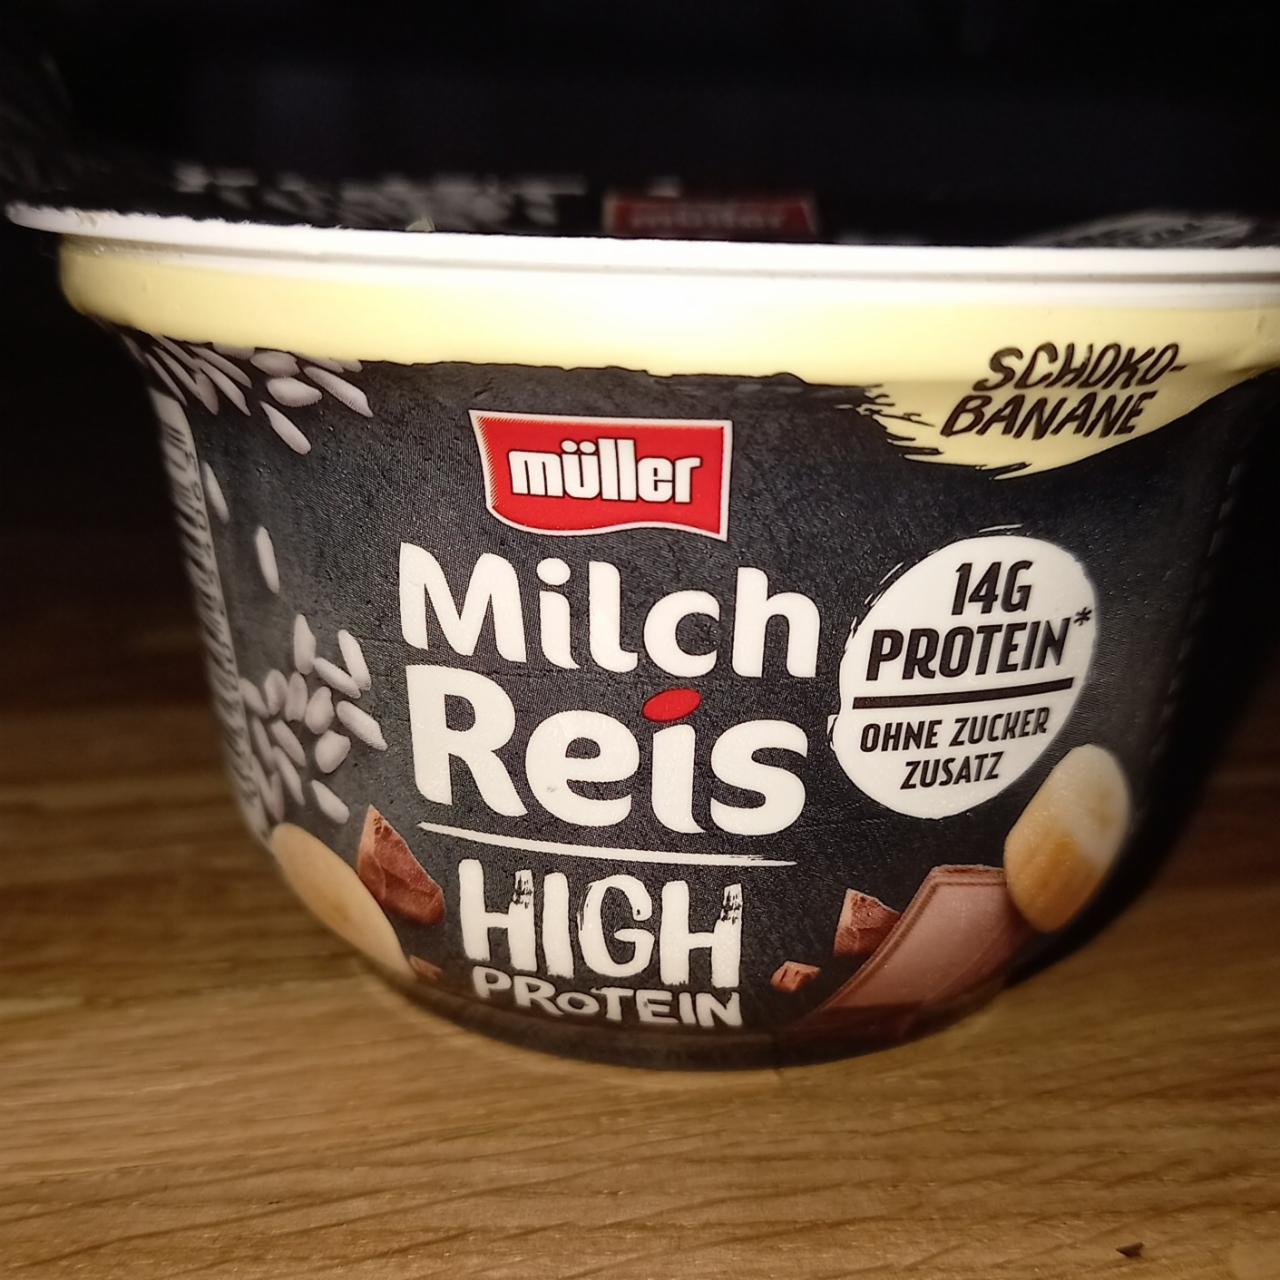 Képek - Milch reis high protein schoko-banane Müller